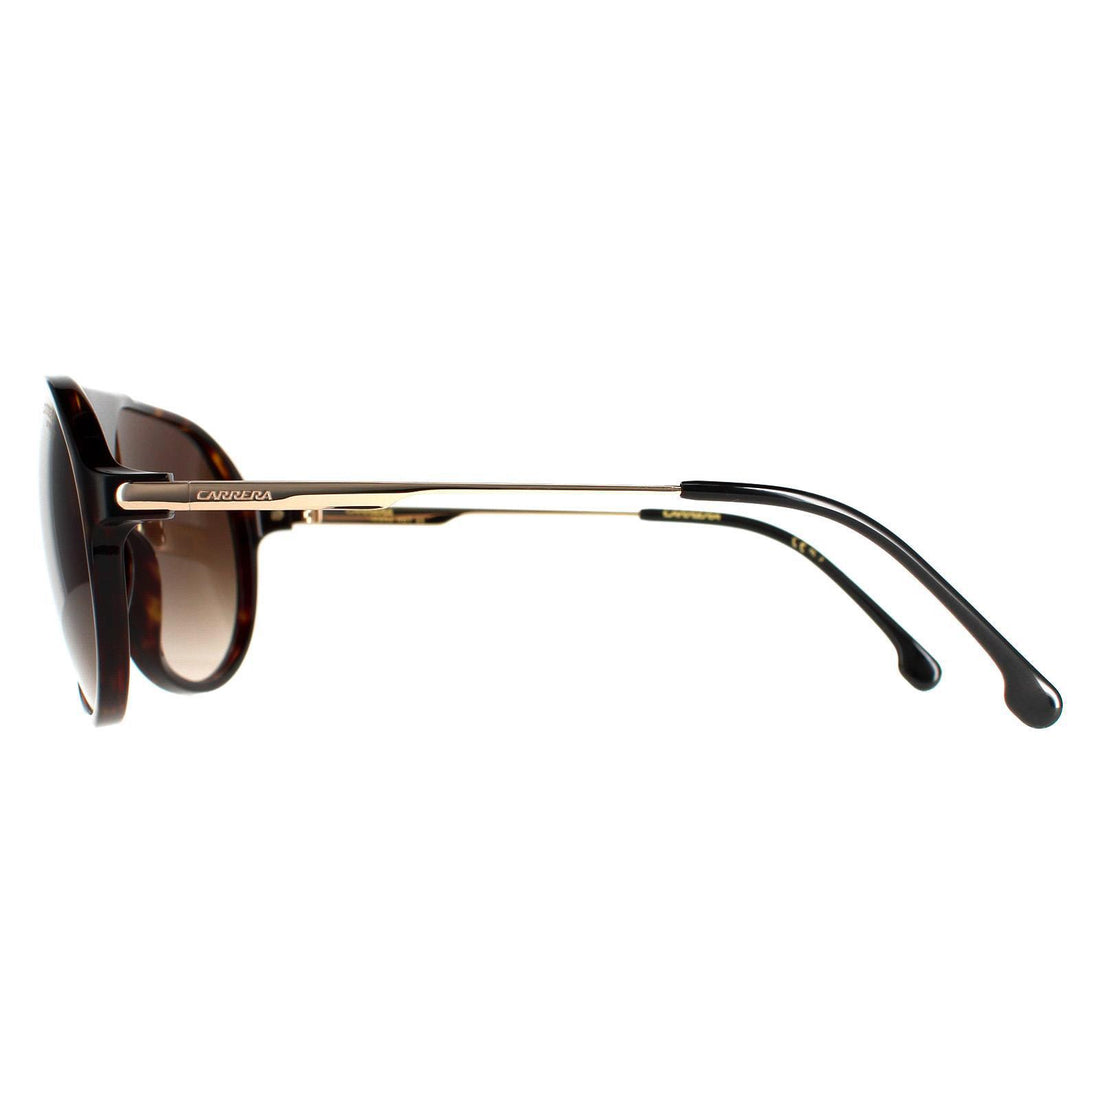 Carrera Sunglasses Hot65 086 HA Dark Havana Brown Gradient